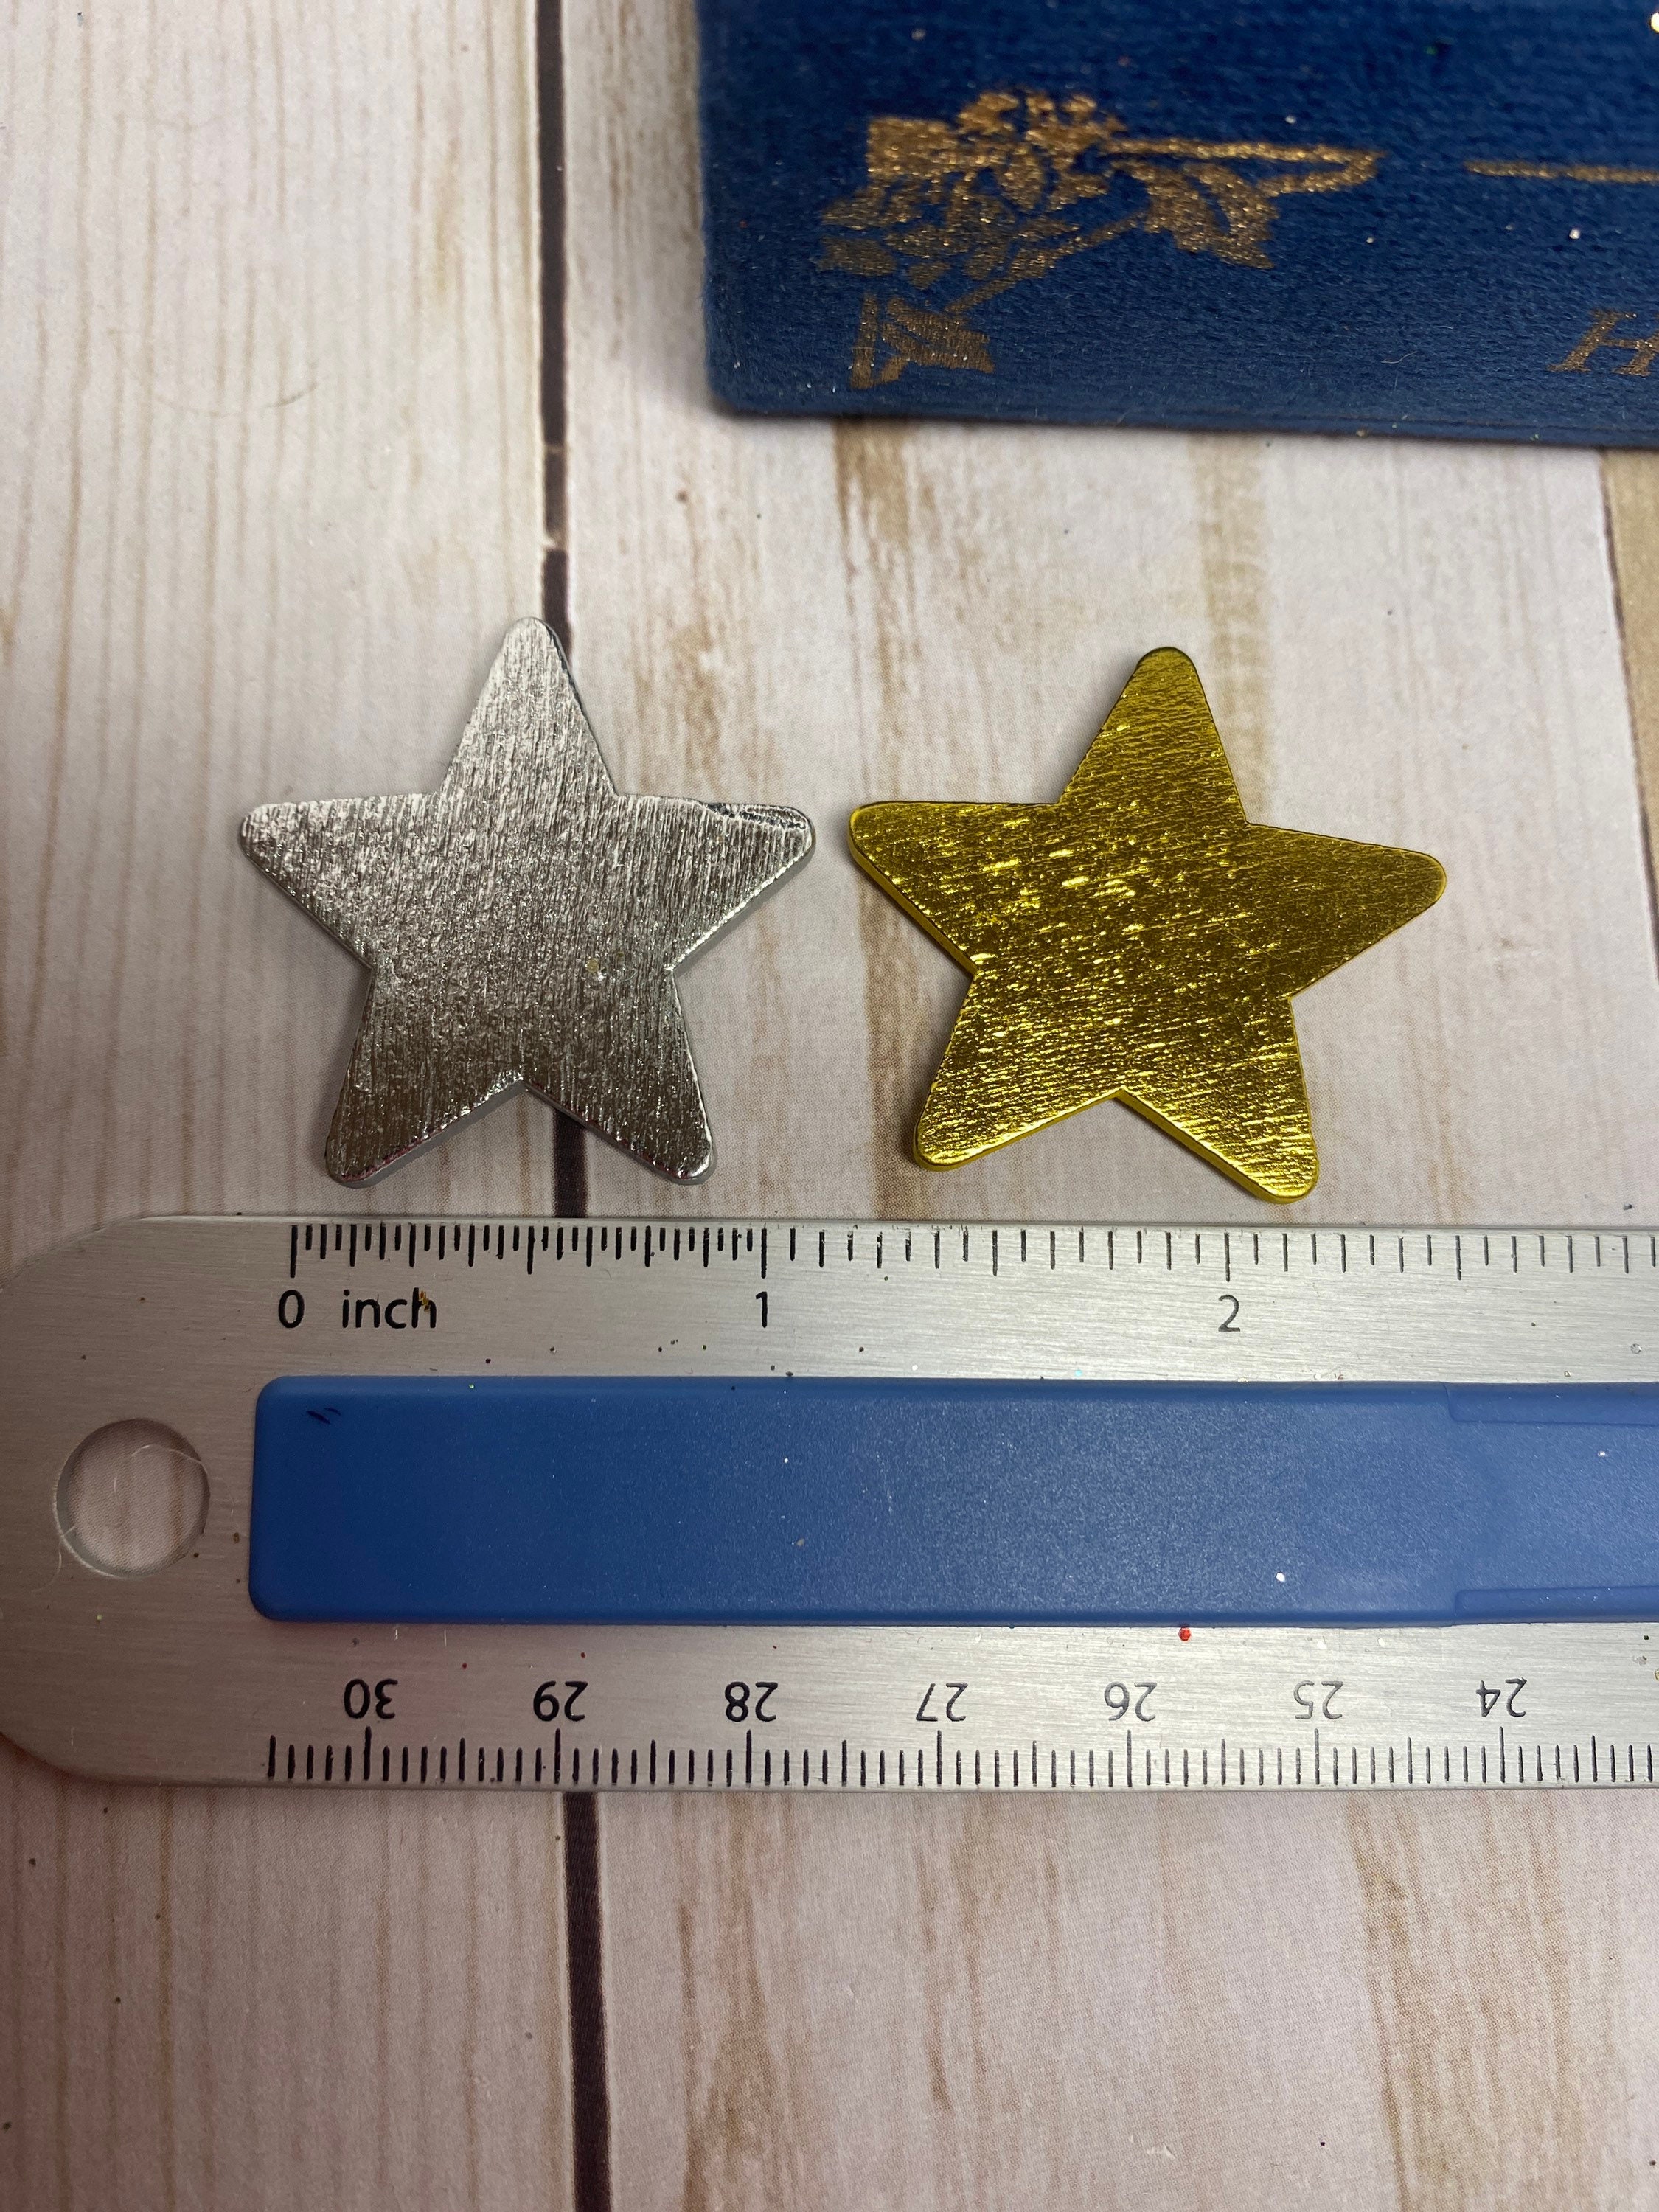 Gold Glitter Star Sticker Seals - Pack of 24